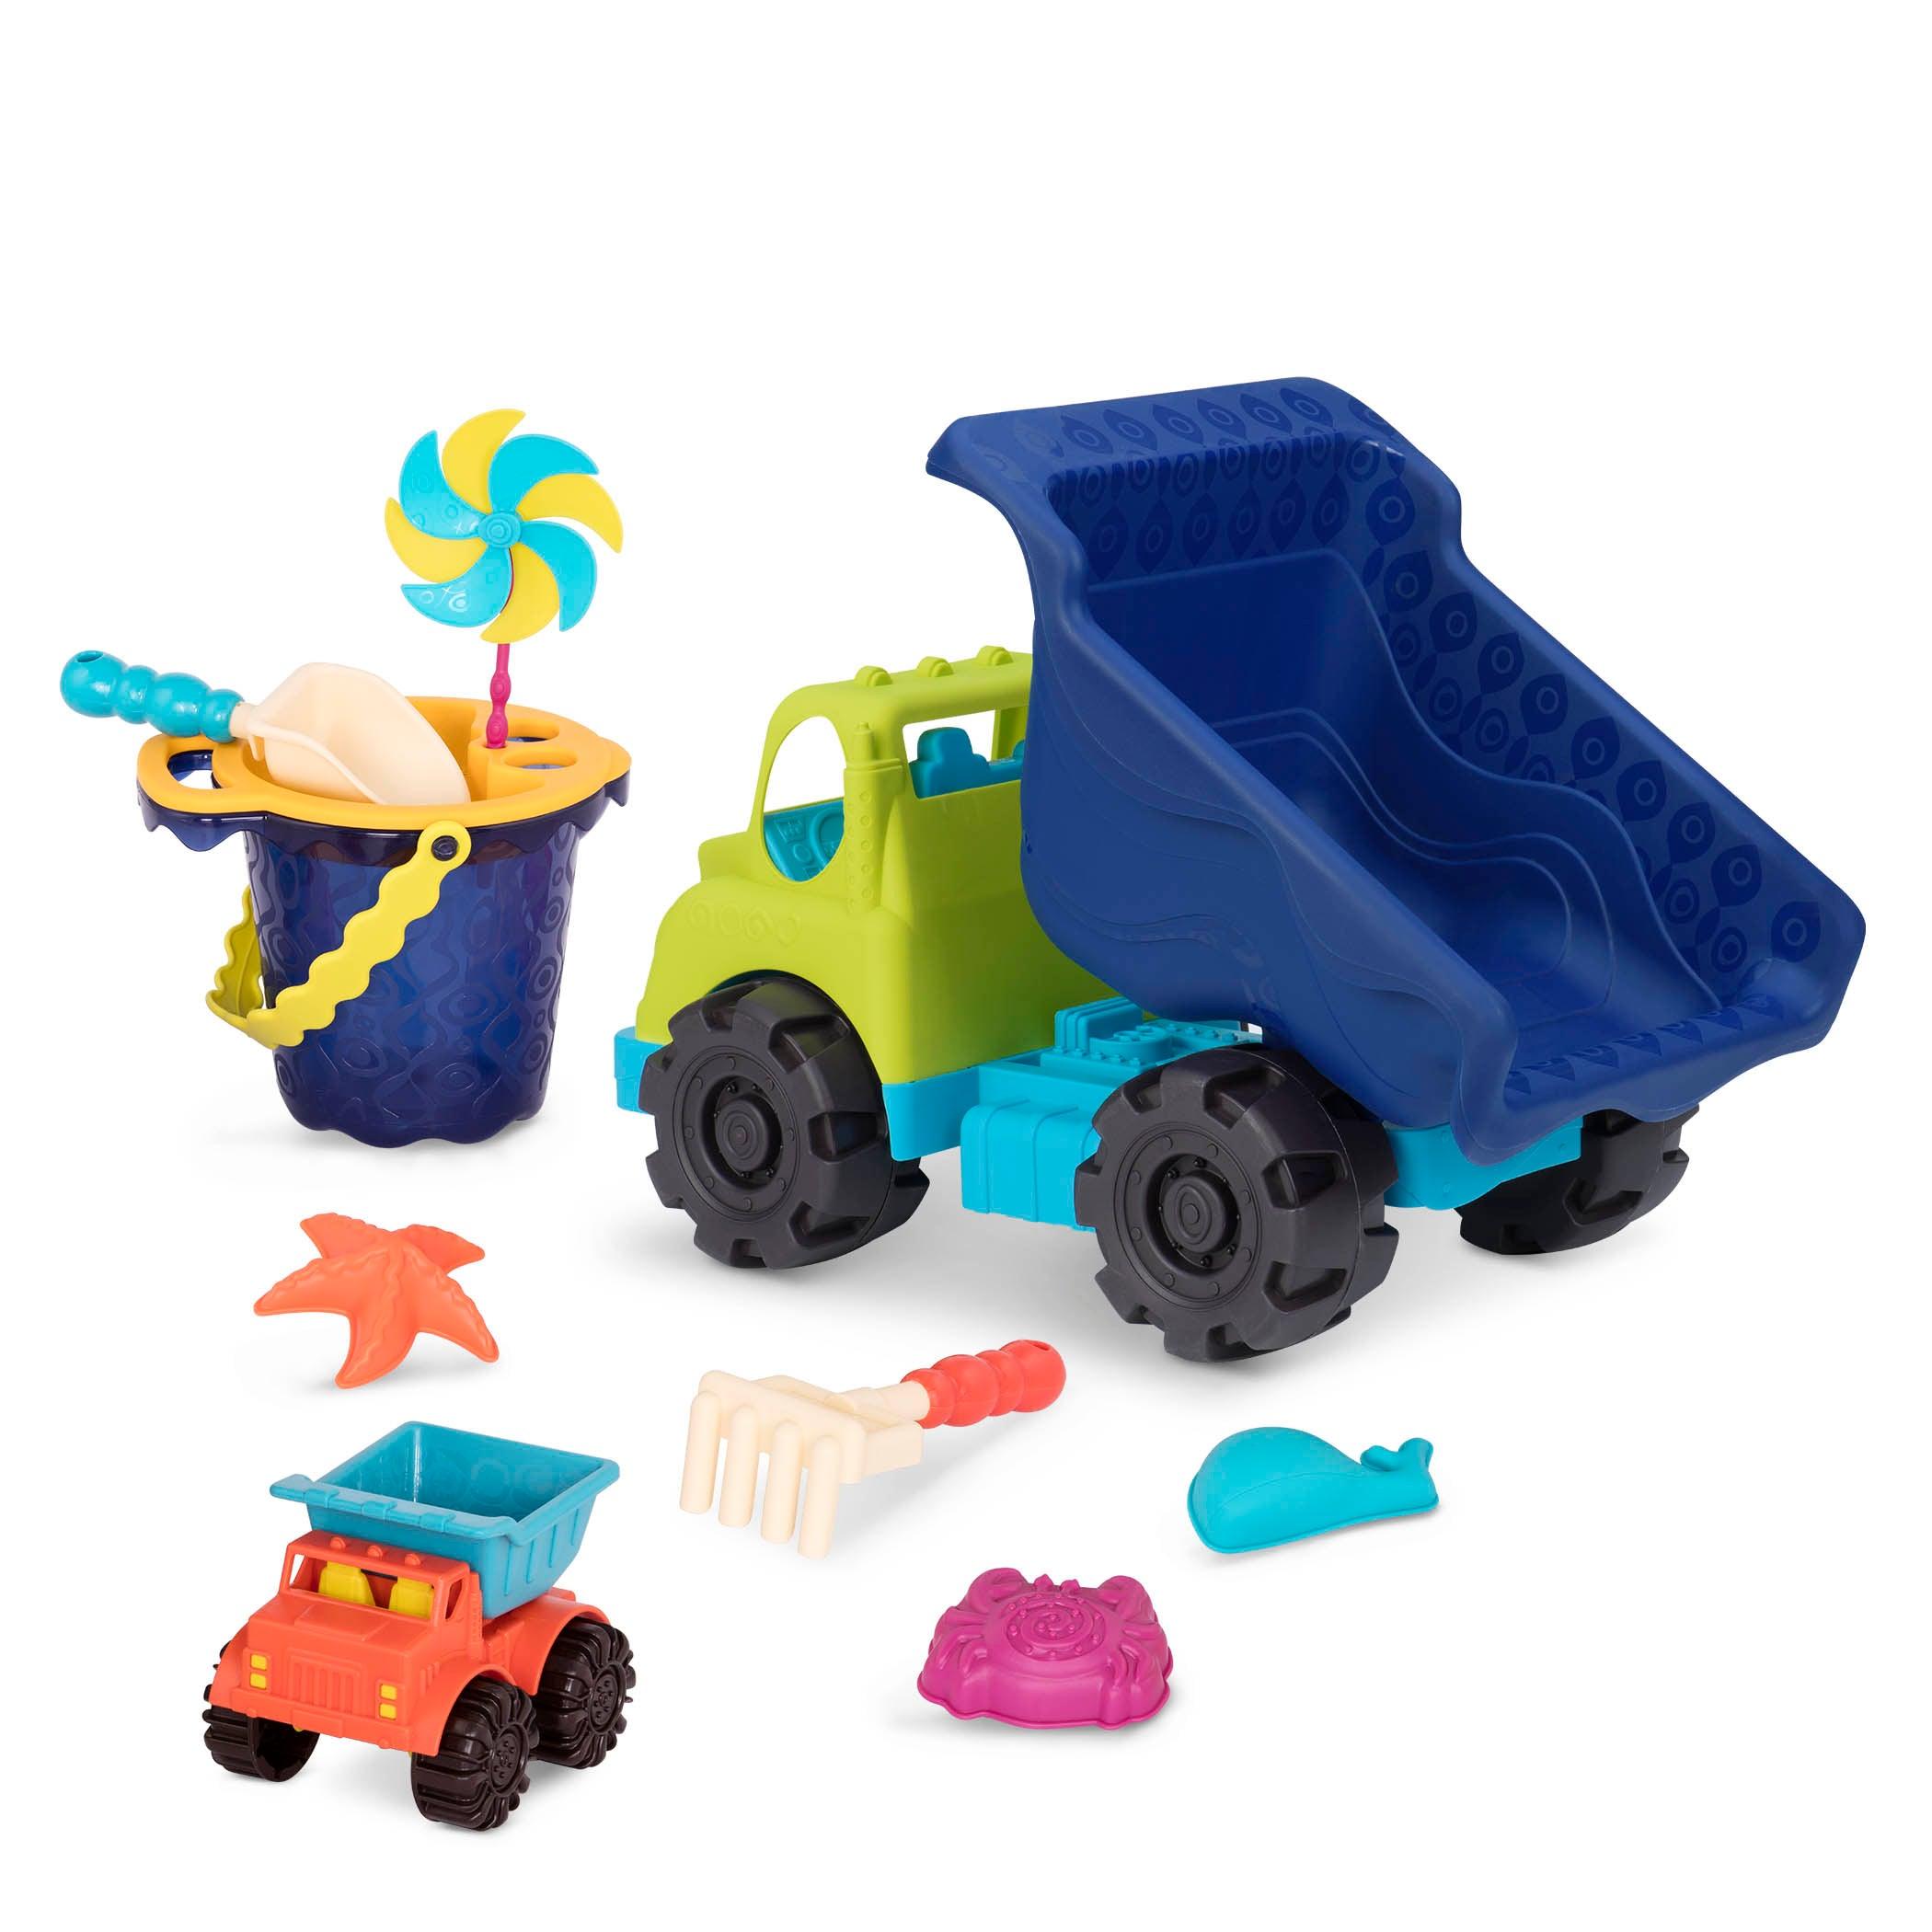 B.Toys: Riesenkipper + Eimer mit Sandzubehör kolossale Kreuzer & Sand Ahoy